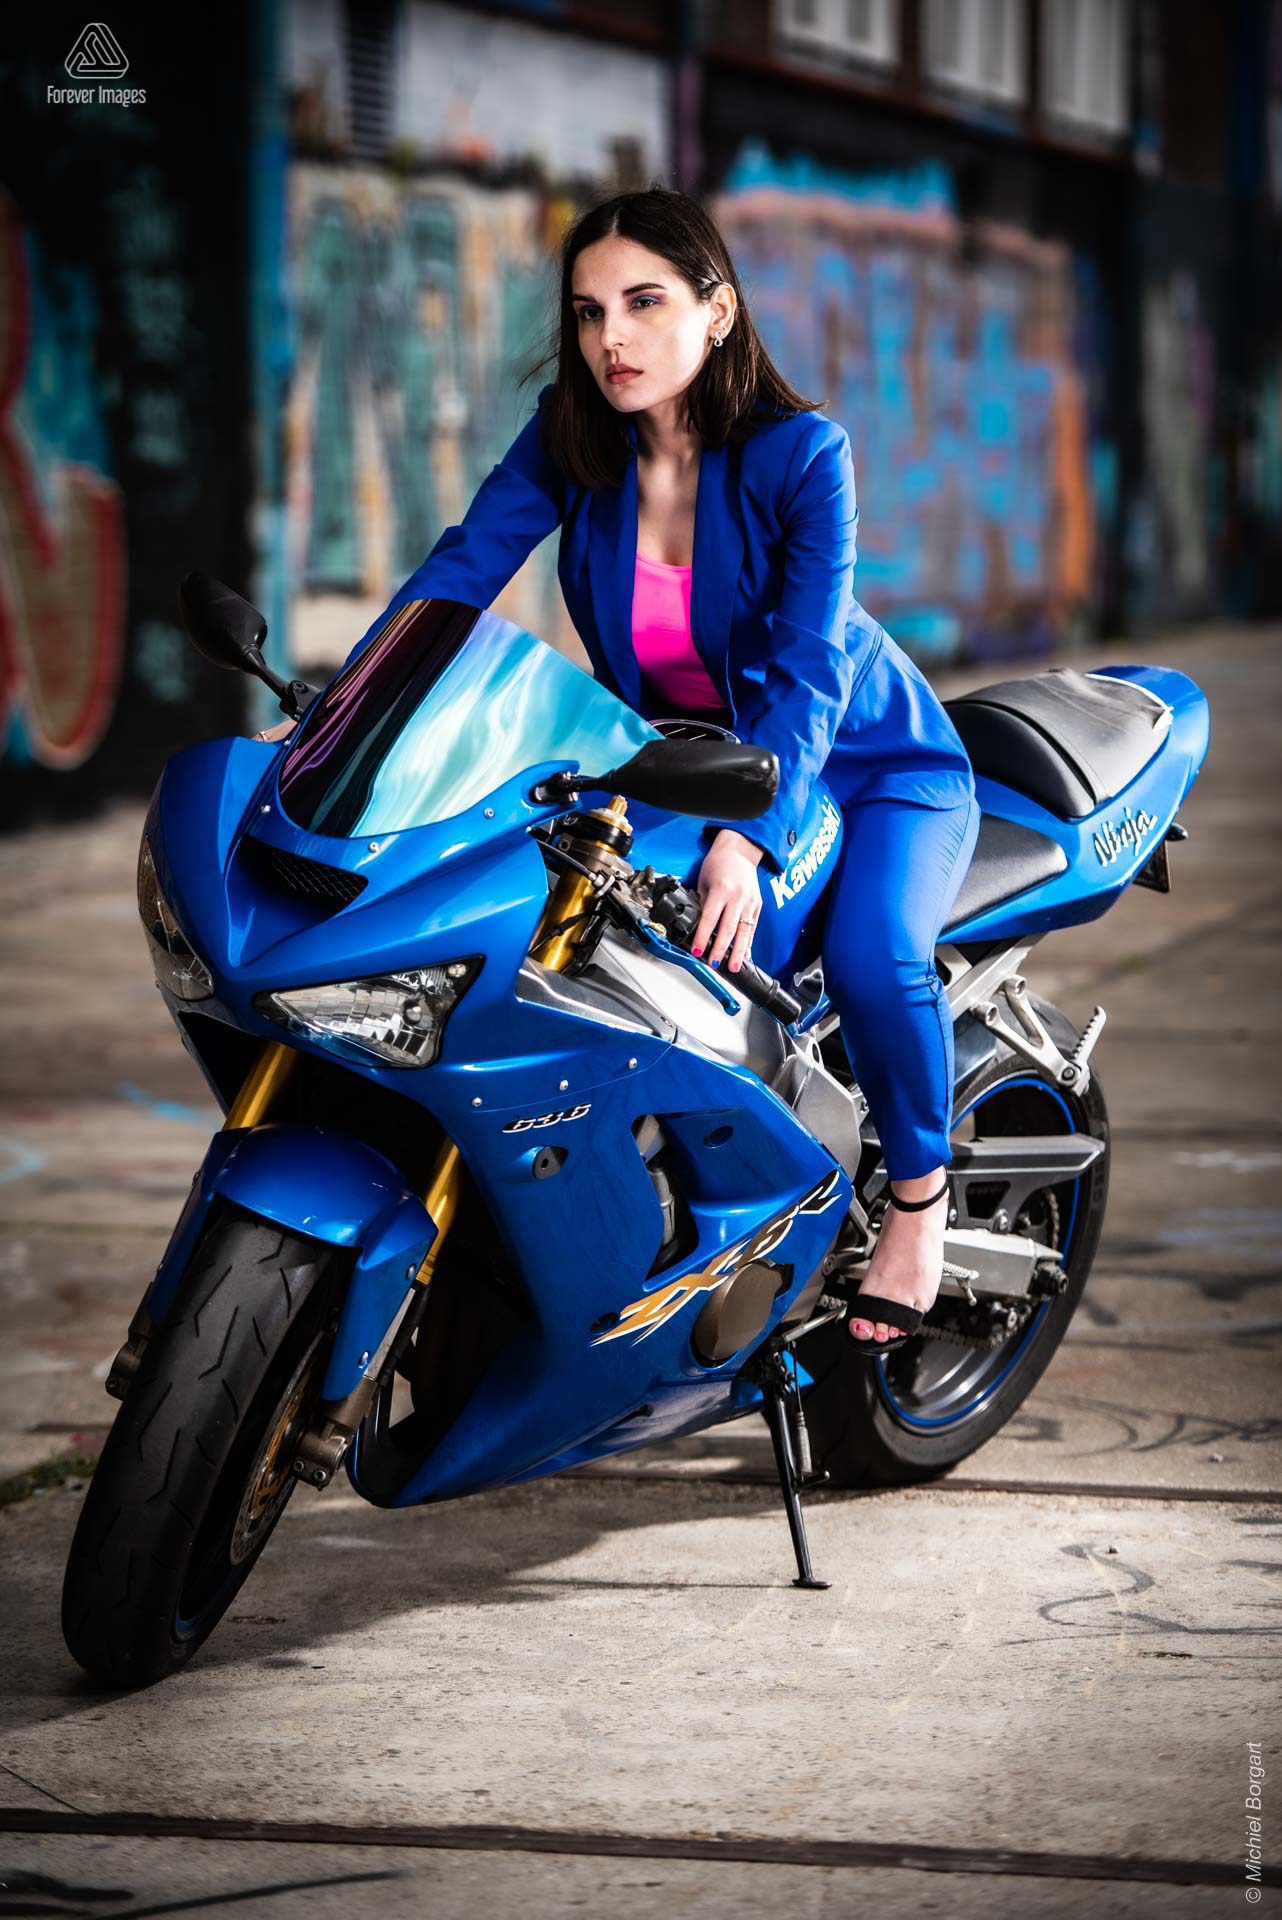 Portrait photo lady in blue suit on Kawasaki Ninja ZX-6R 636 | Isis Vaandrager NDSM Werf Amsterdam | Portrait Photographer Michiel Borgart - Forever Images.